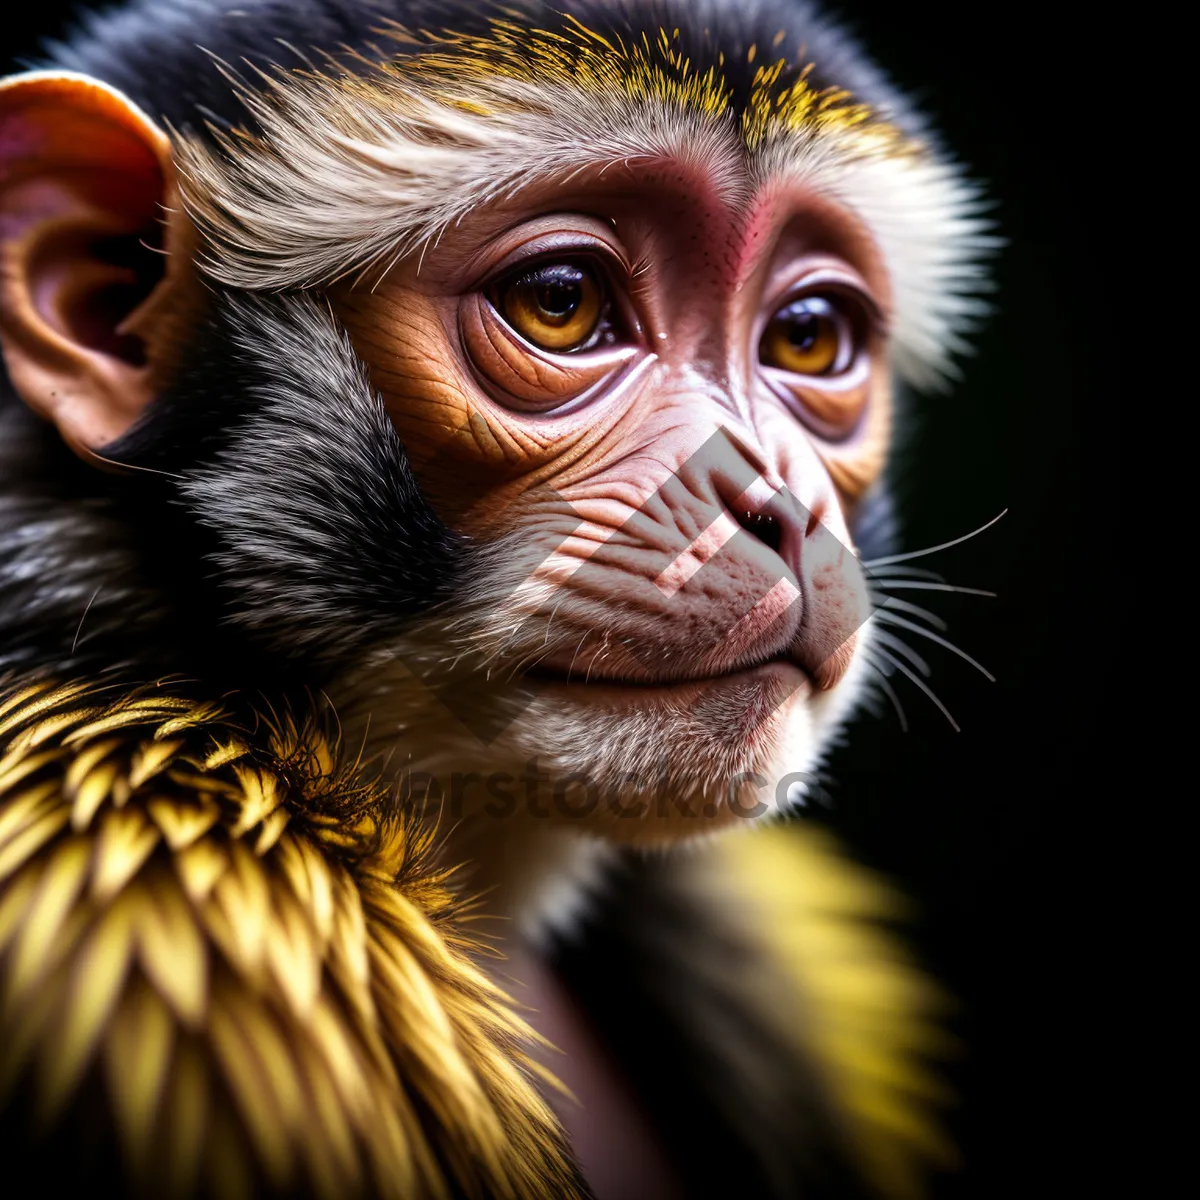 Picture of Endangered Orangutan portrait in the wild